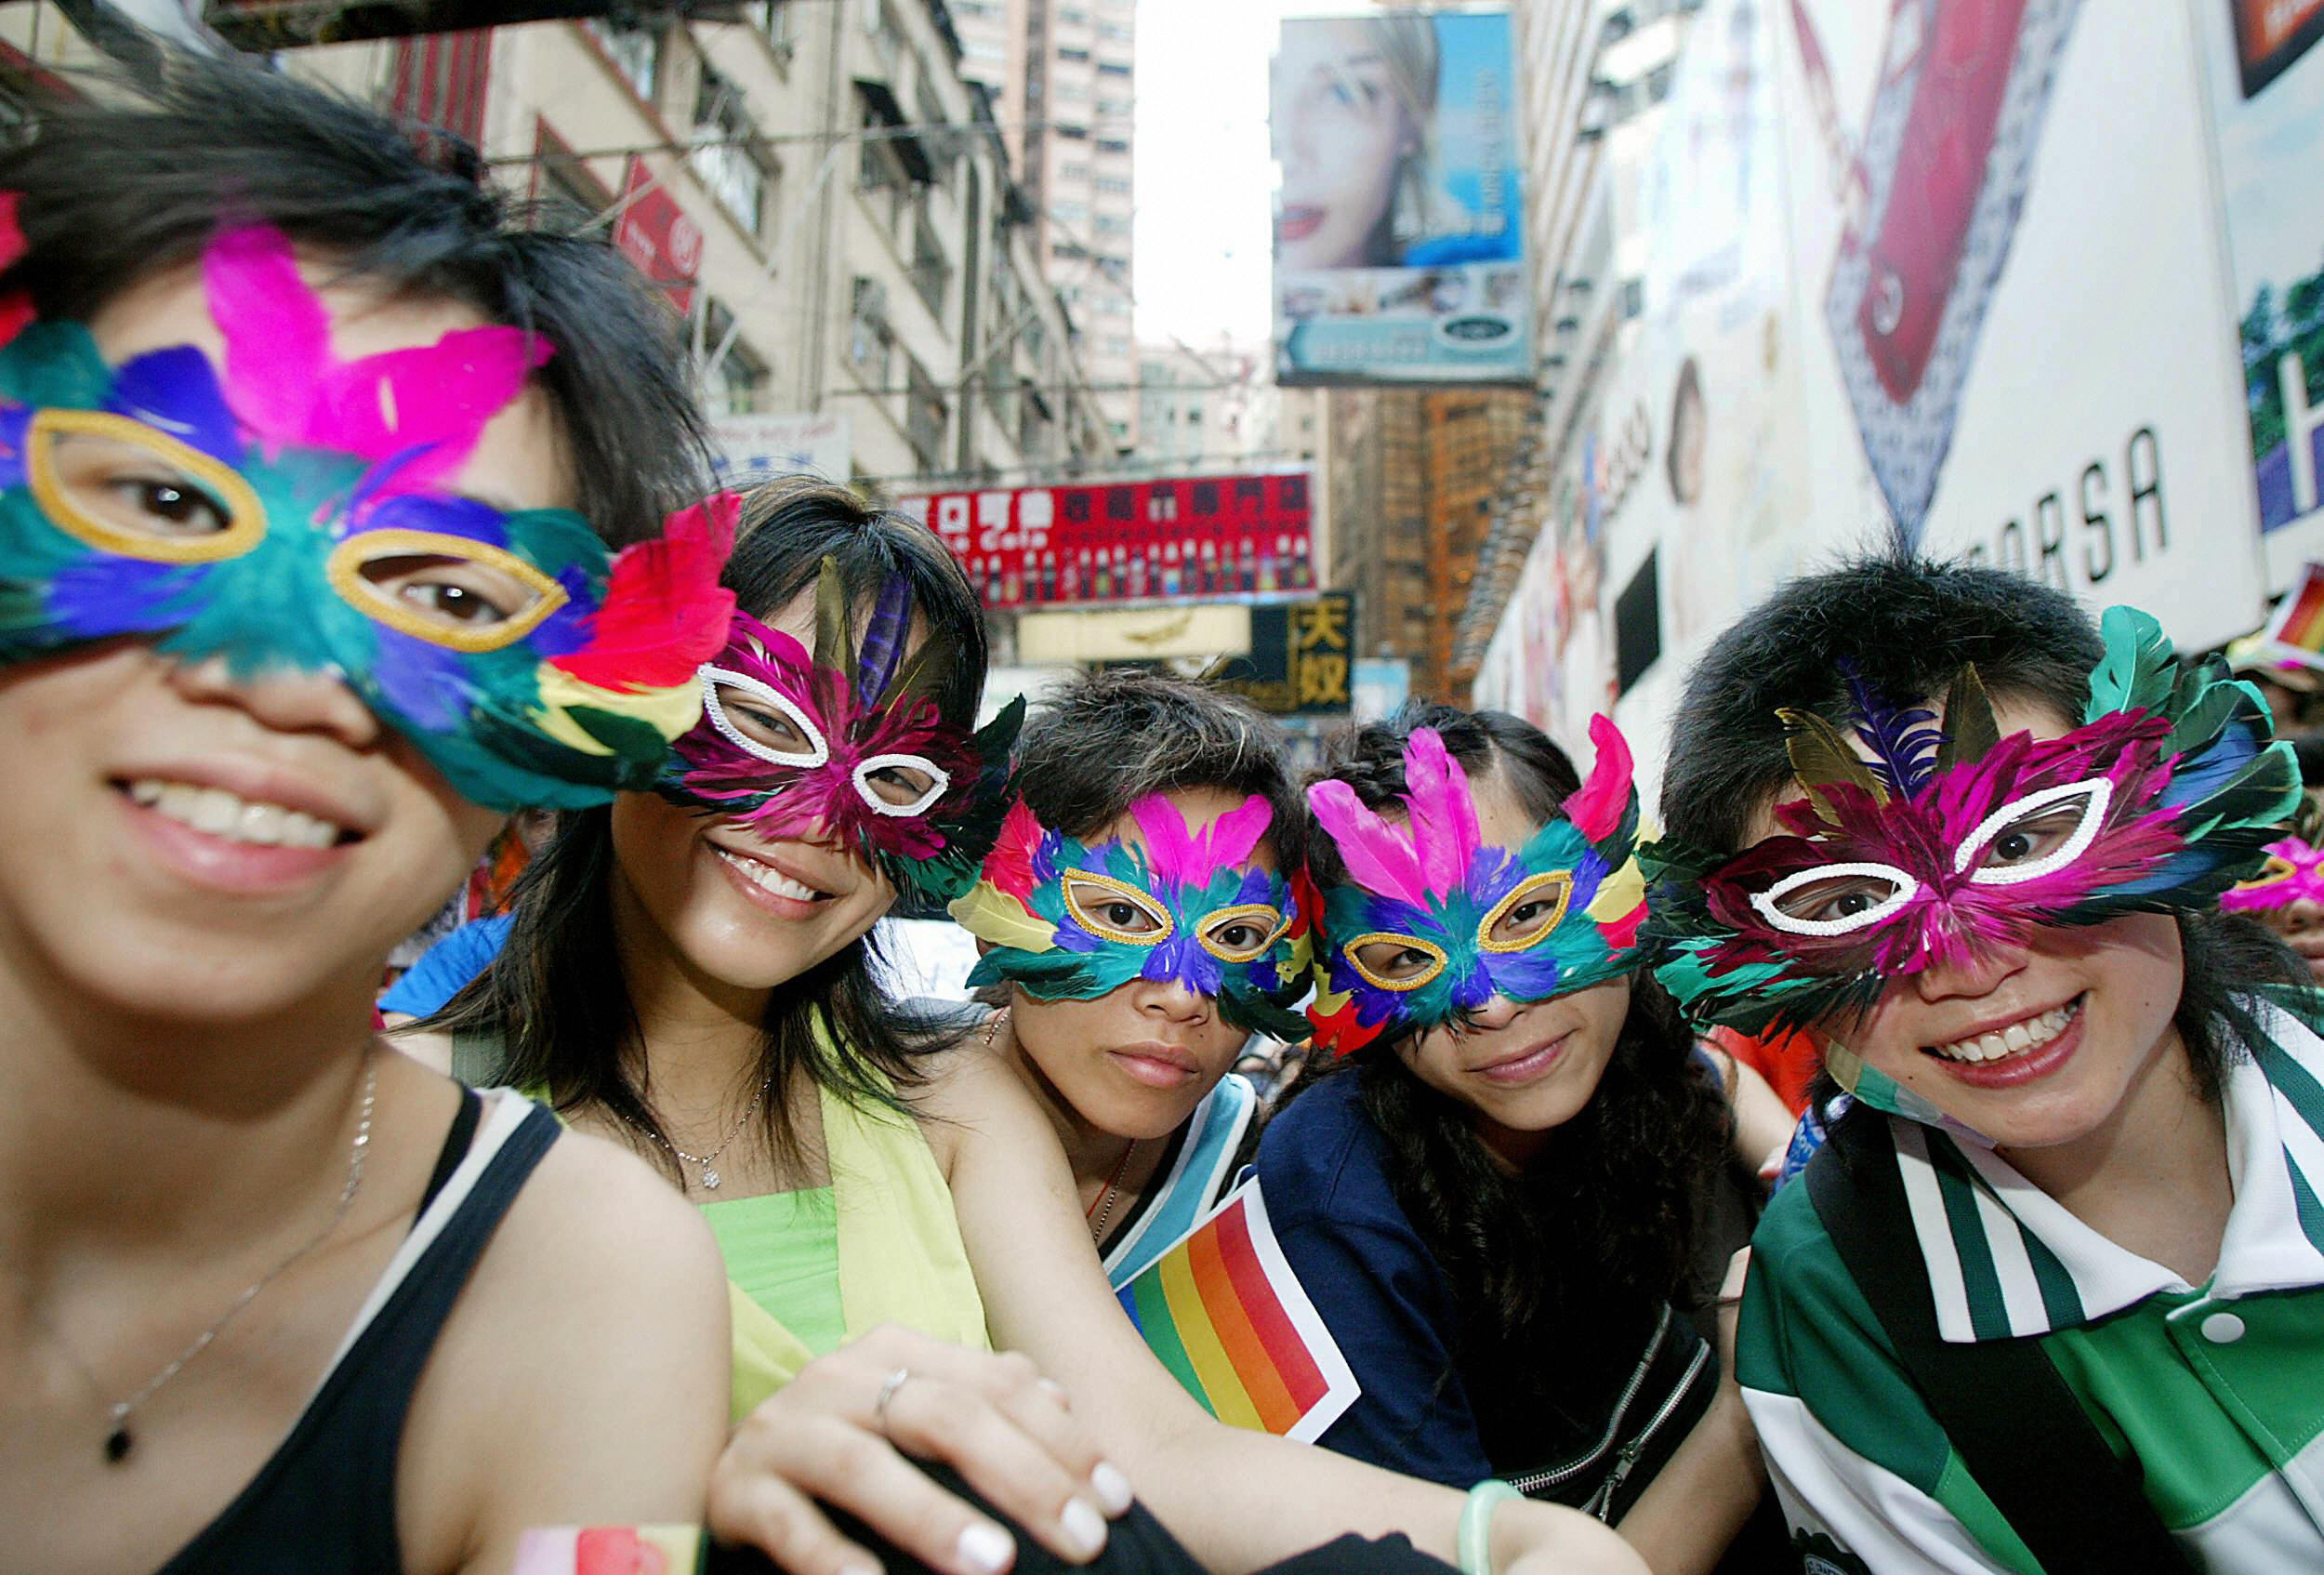 Hong Kong banned pride march